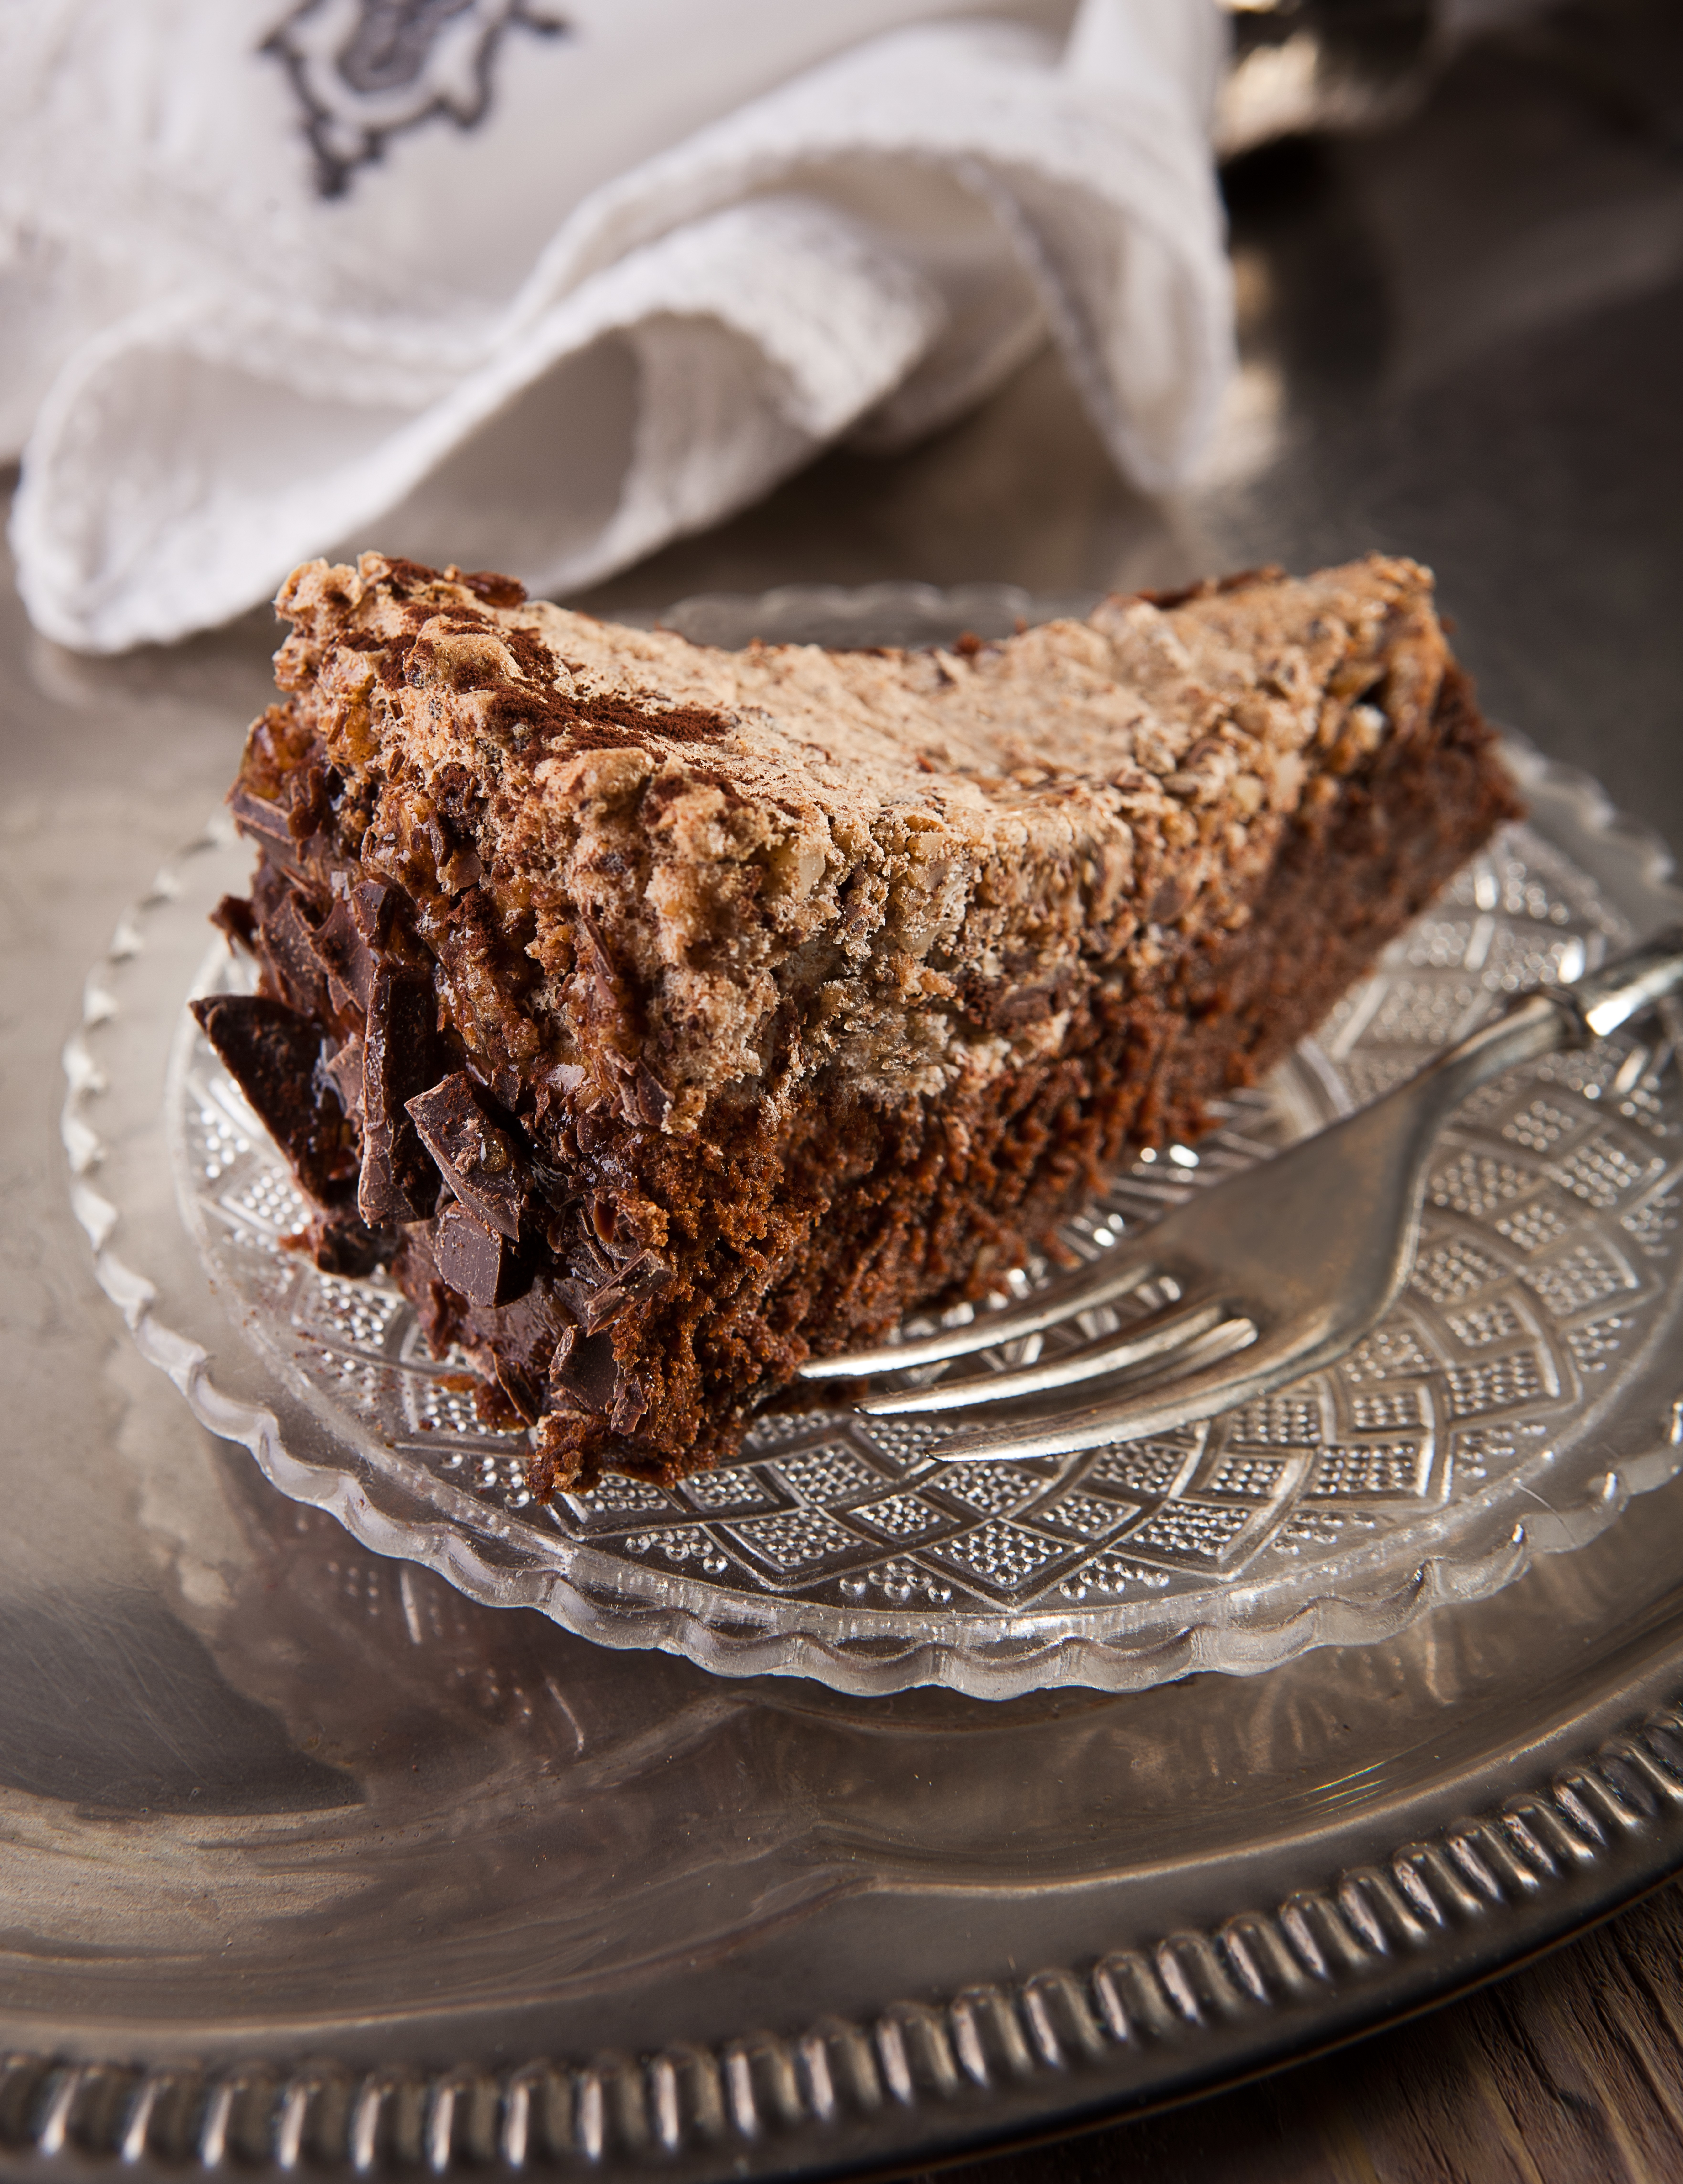 Chocolate cake with hazelnut icing (Credit: Anatoly Michaelo)